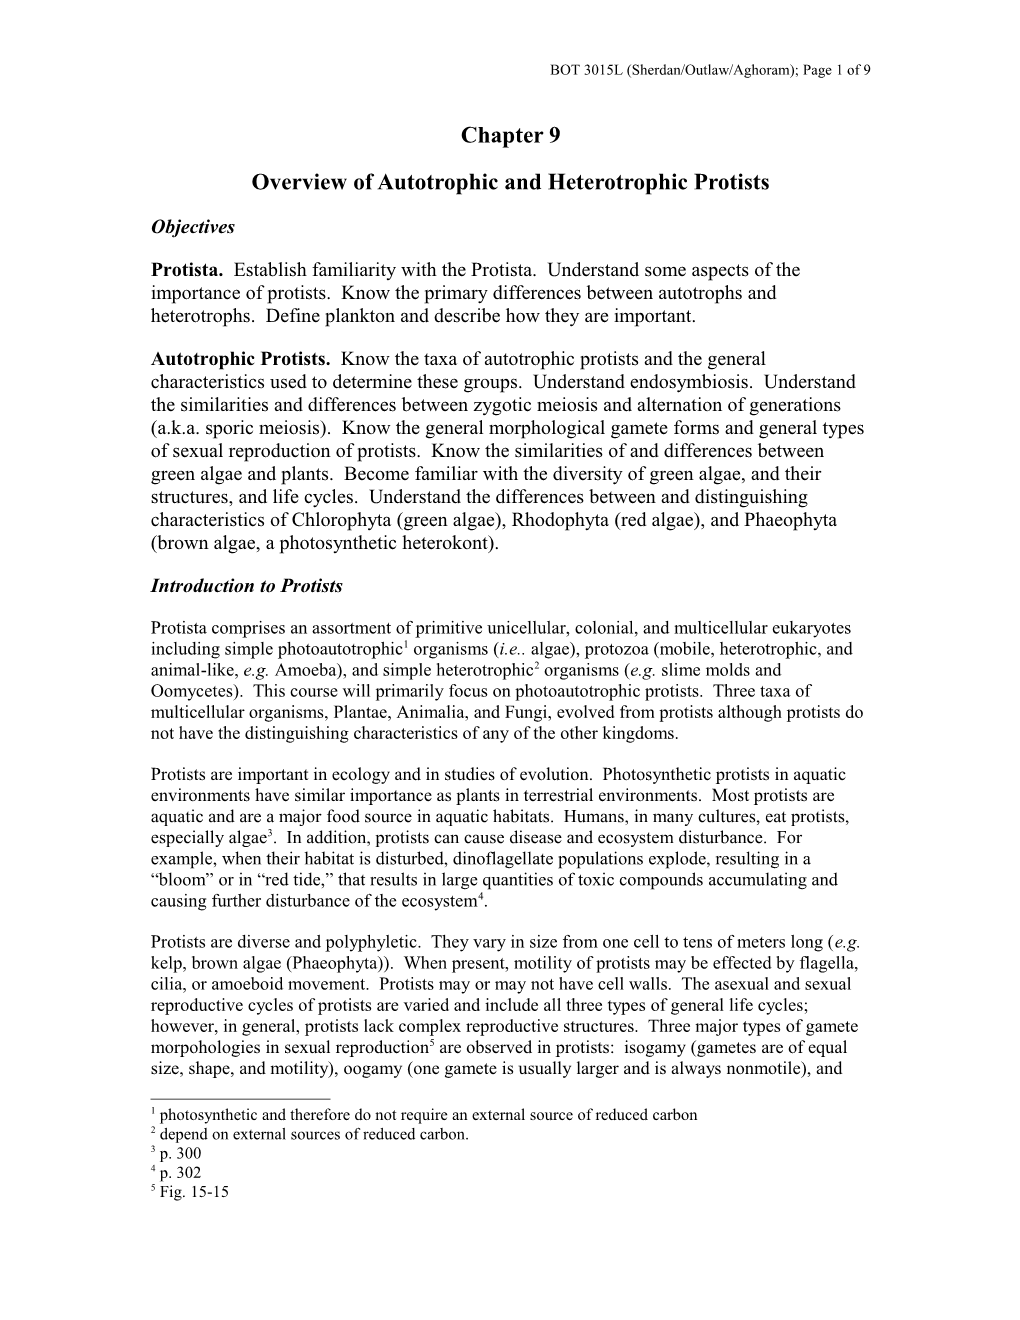 Overview of Autotrophic and Heterotrophic Protists